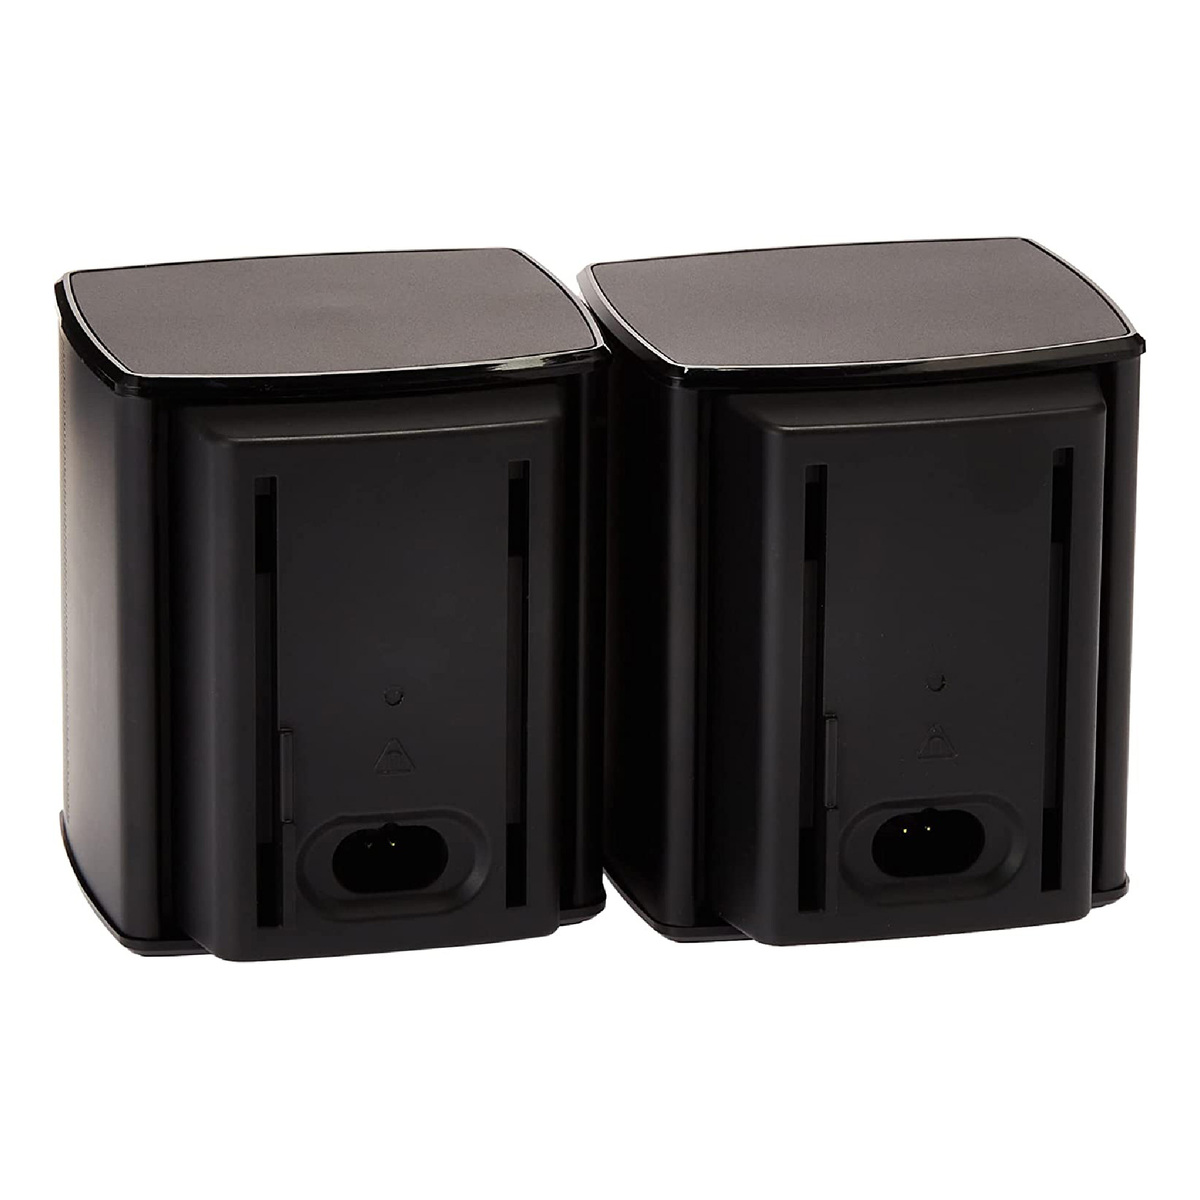 Bose Surround Speakers  809281 230V Black